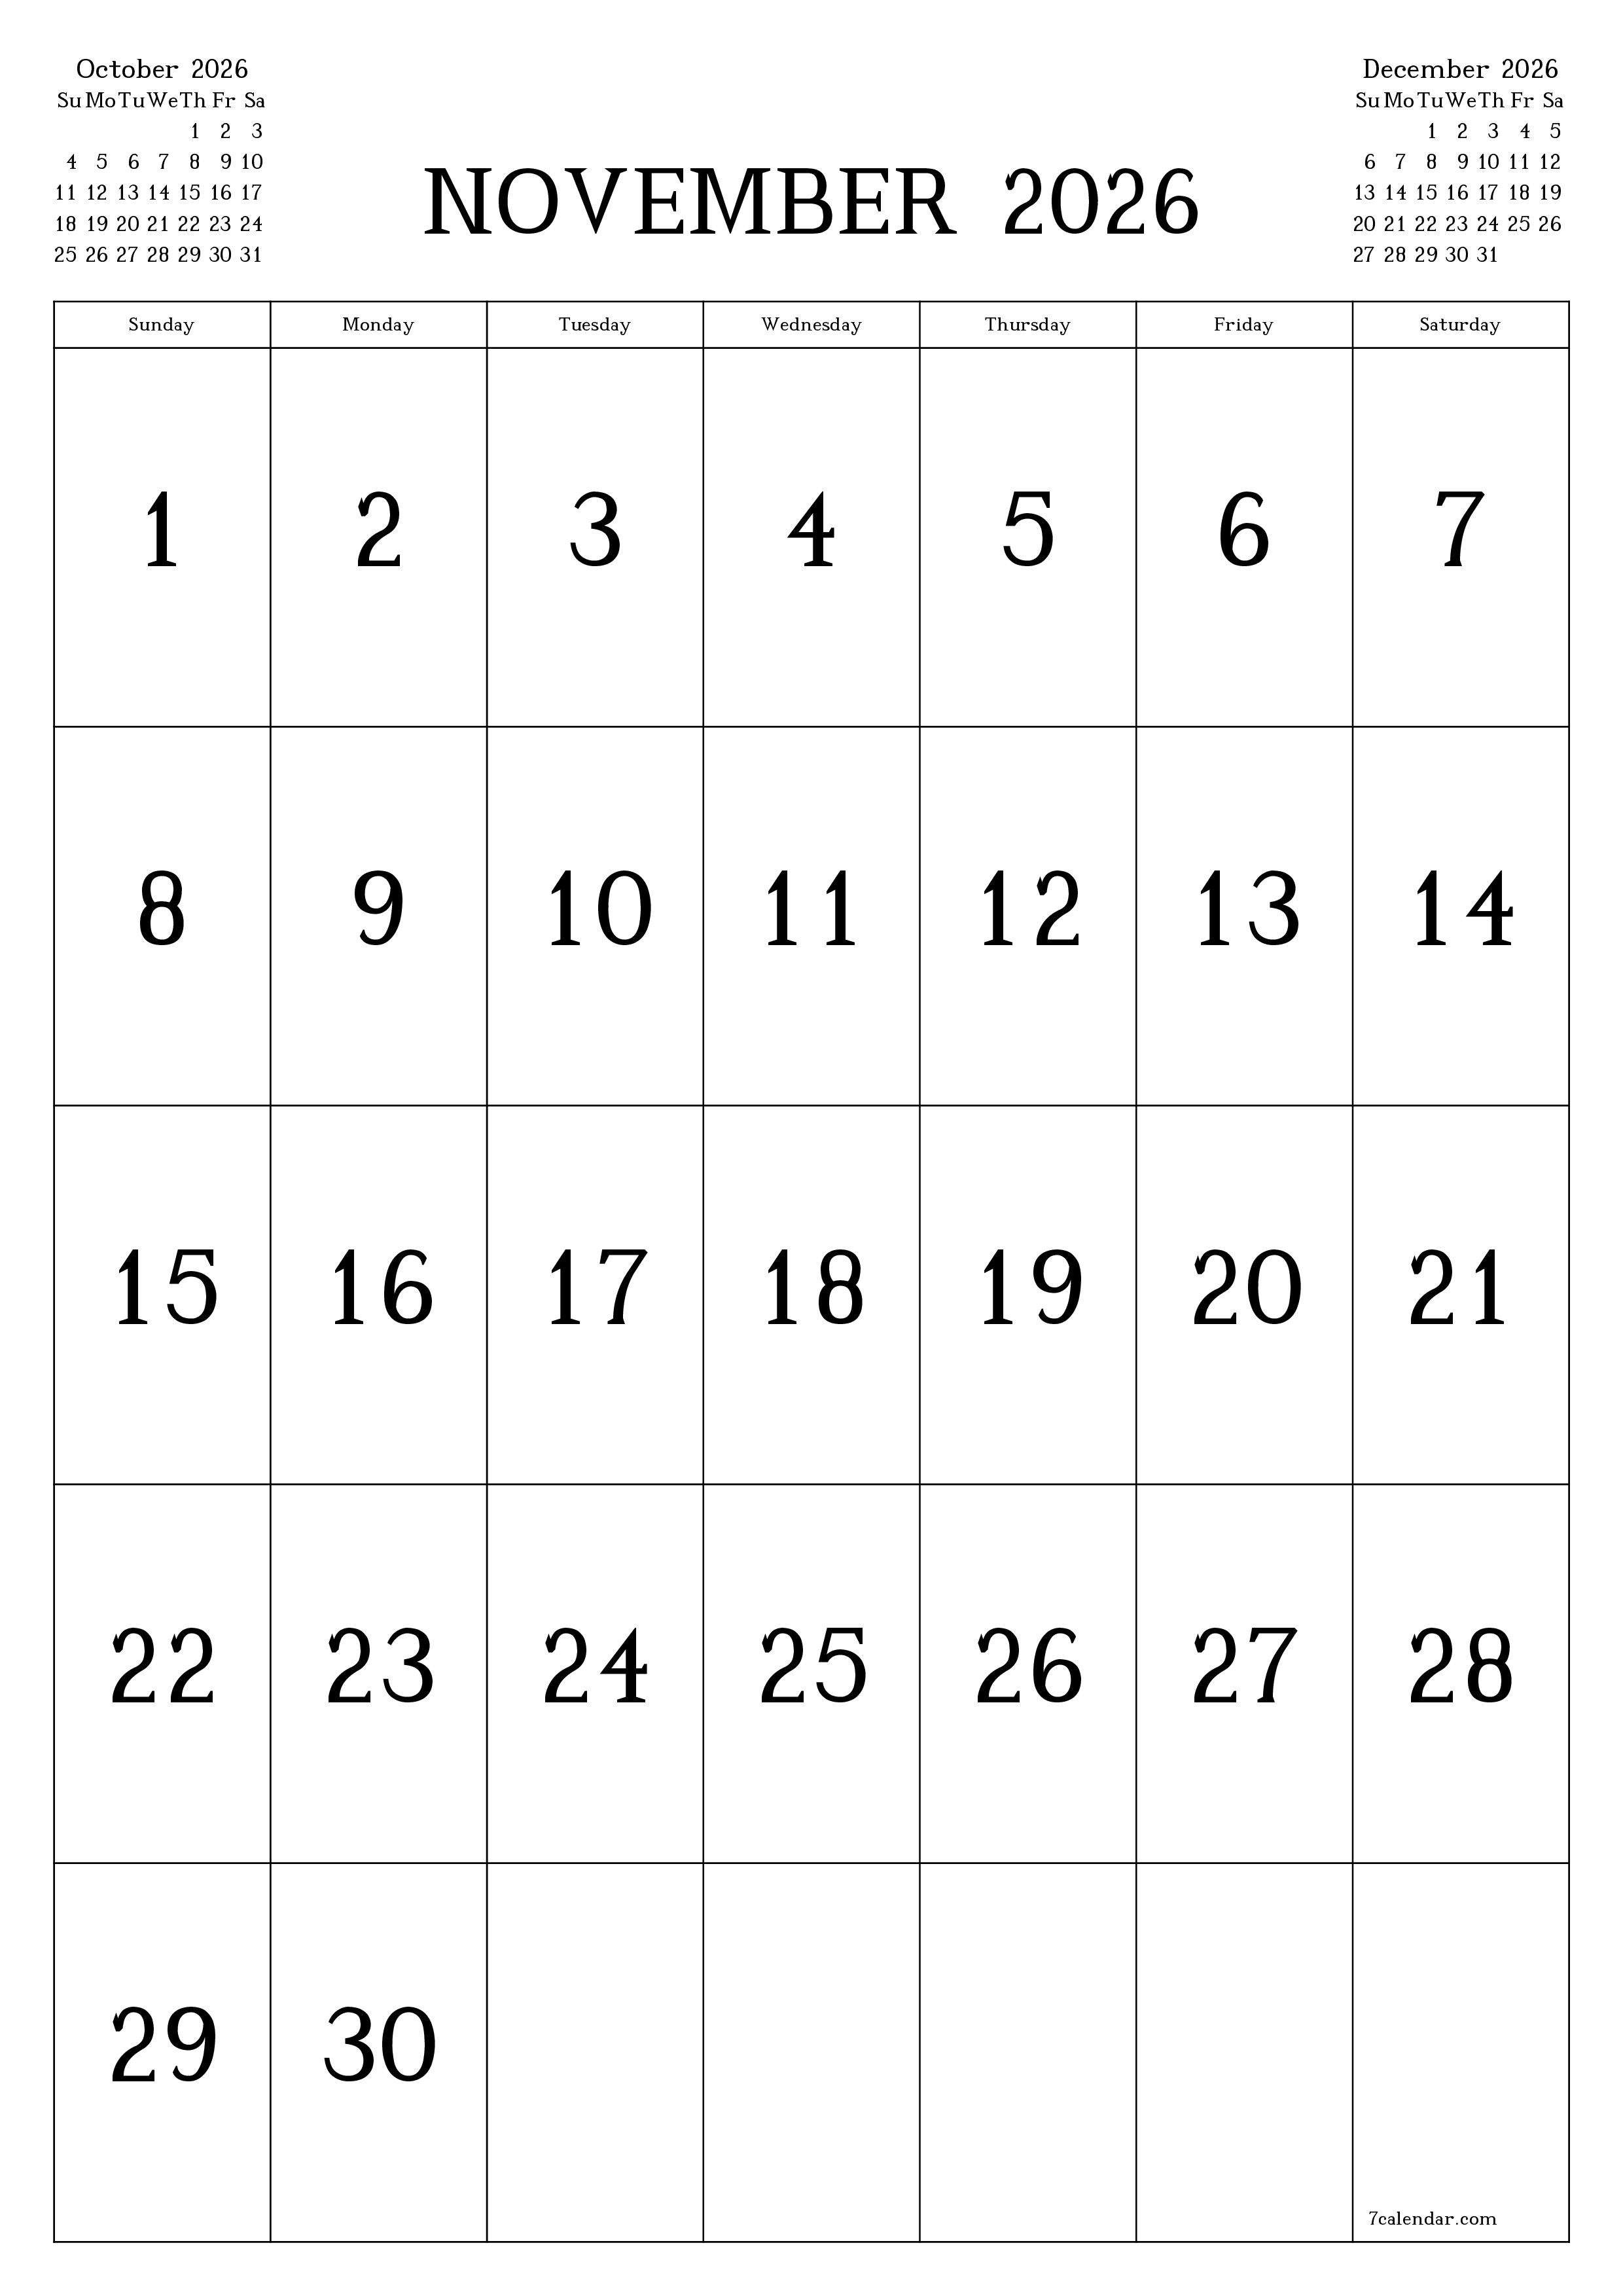 Blank calendar November 2026